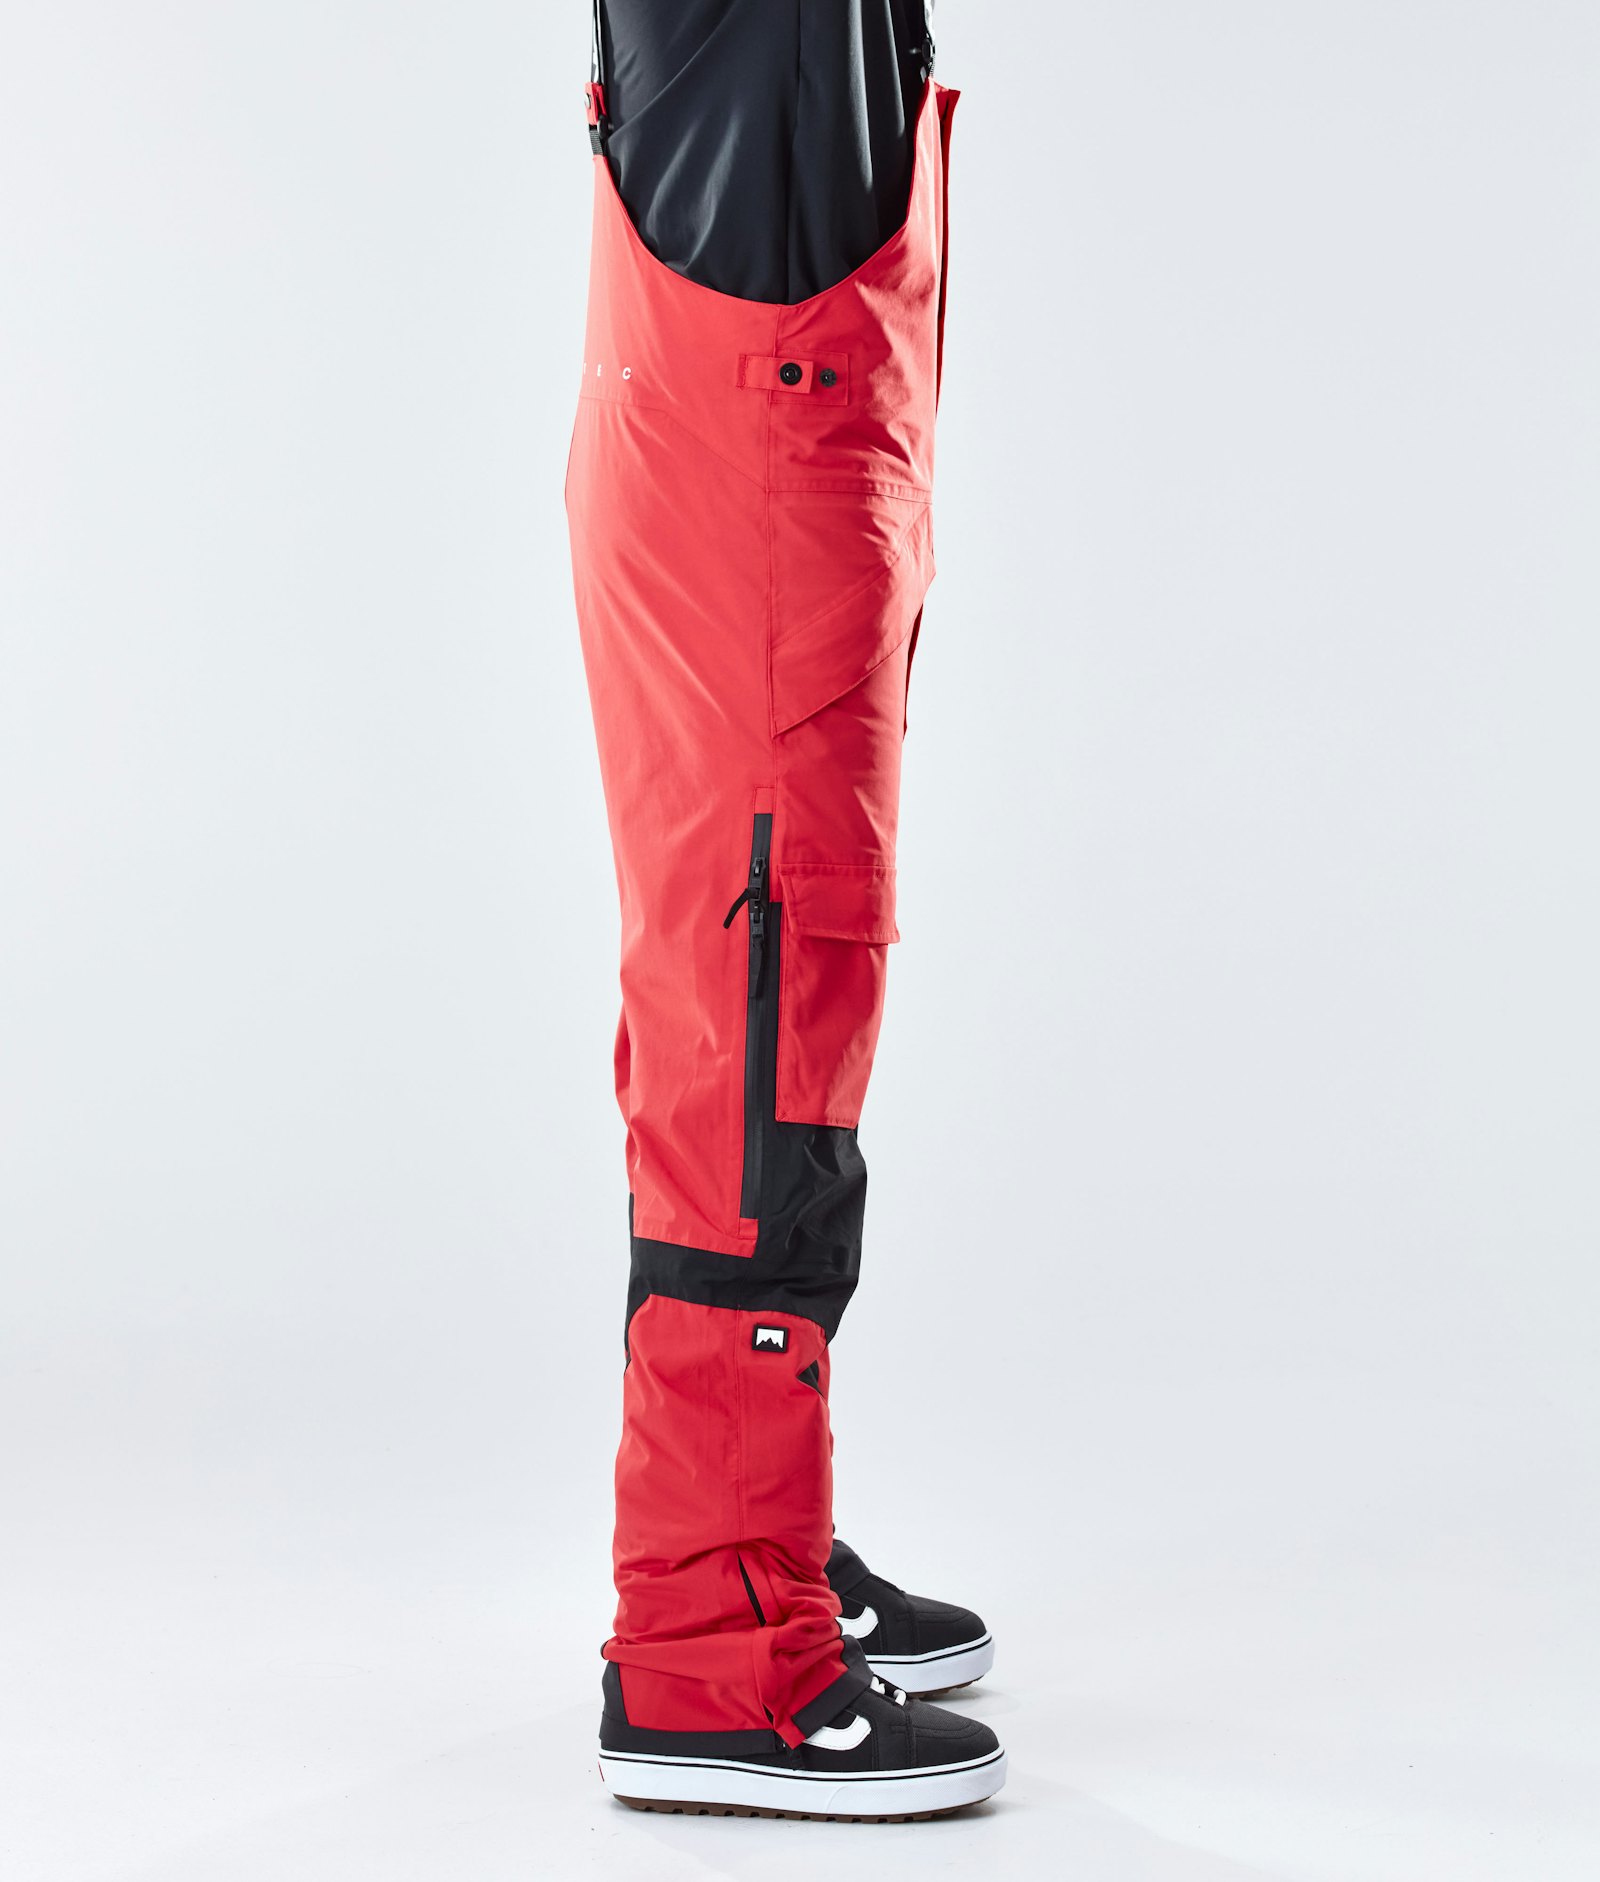 Fawk 2020 Snowboard Pants Men Red/Black Renewed, Image 2 of 6